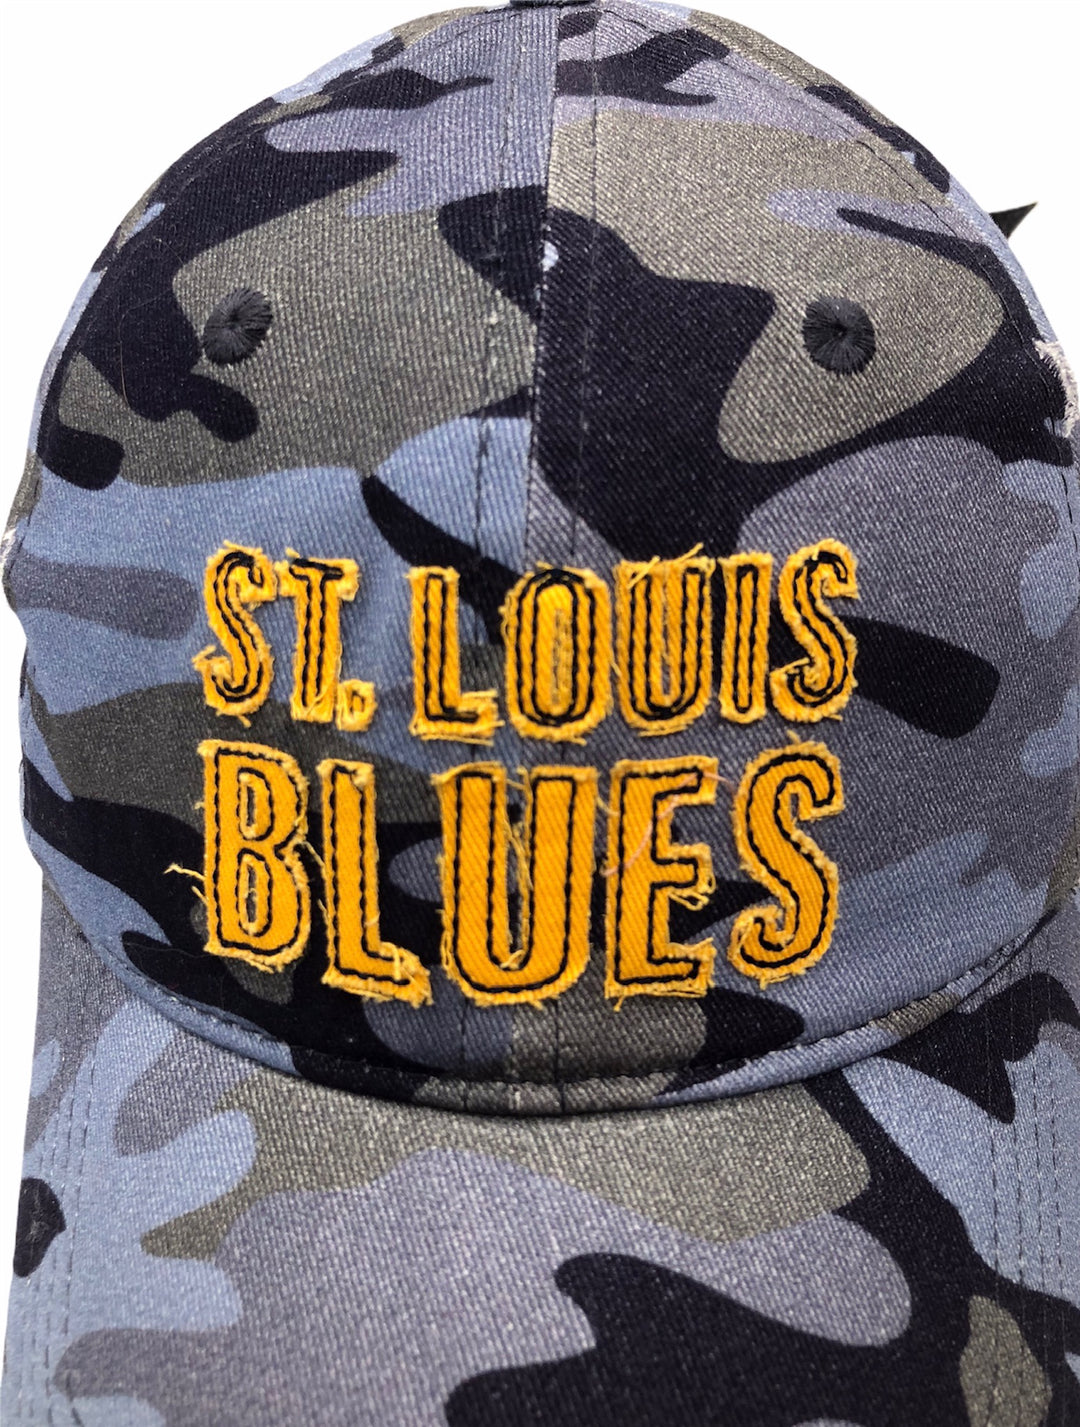 ST. LOUIS BLUES LUSSO STYLE NOTE STRAPBACK HAT - ARCTIC CAMO